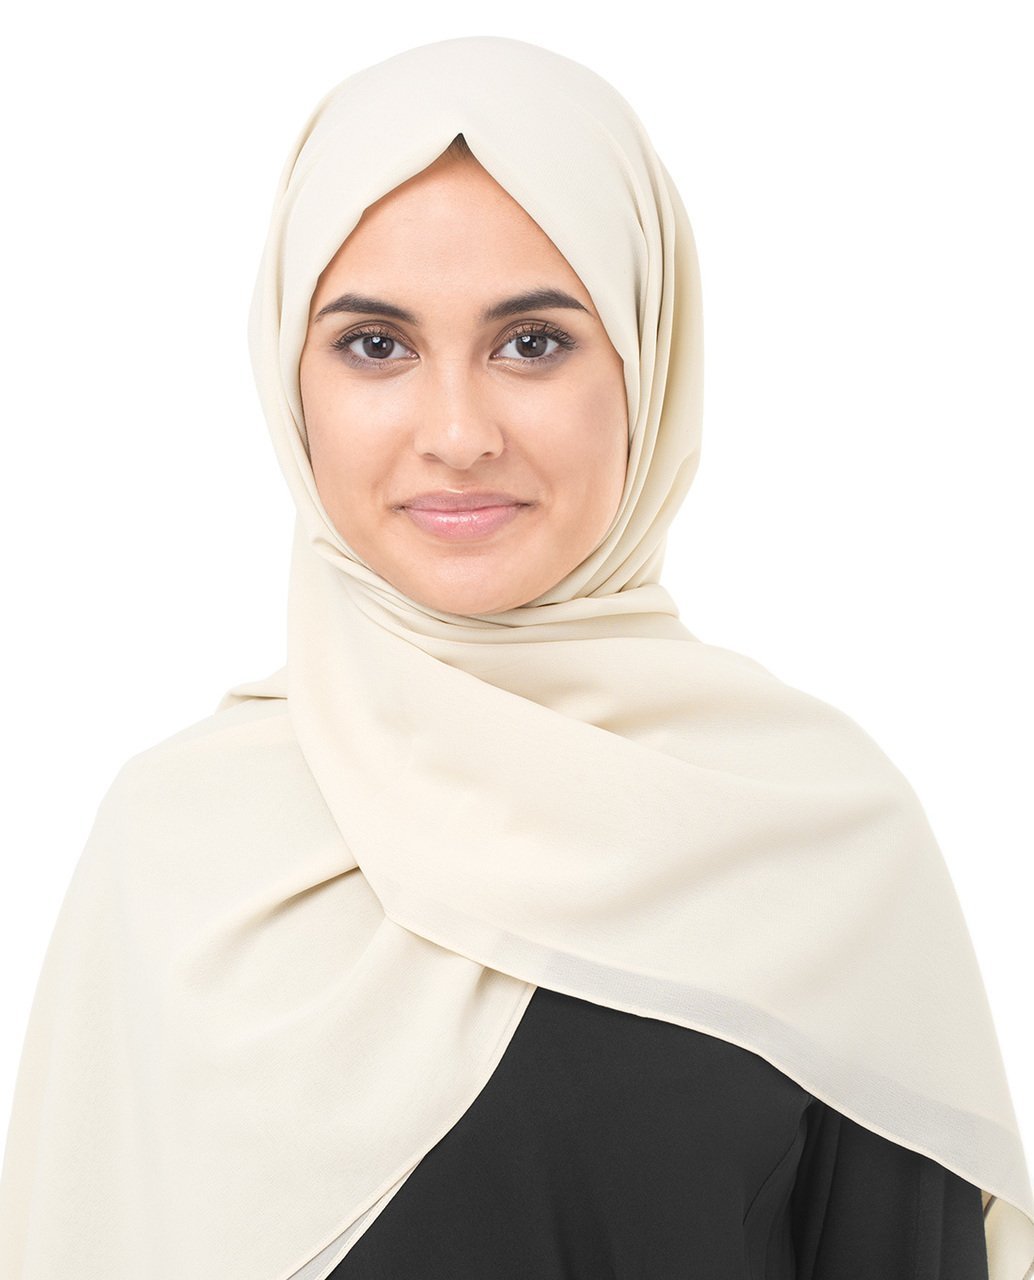 Shop for Georgette Hijab Scarf in Fog Beige Poly - ModestPath.com